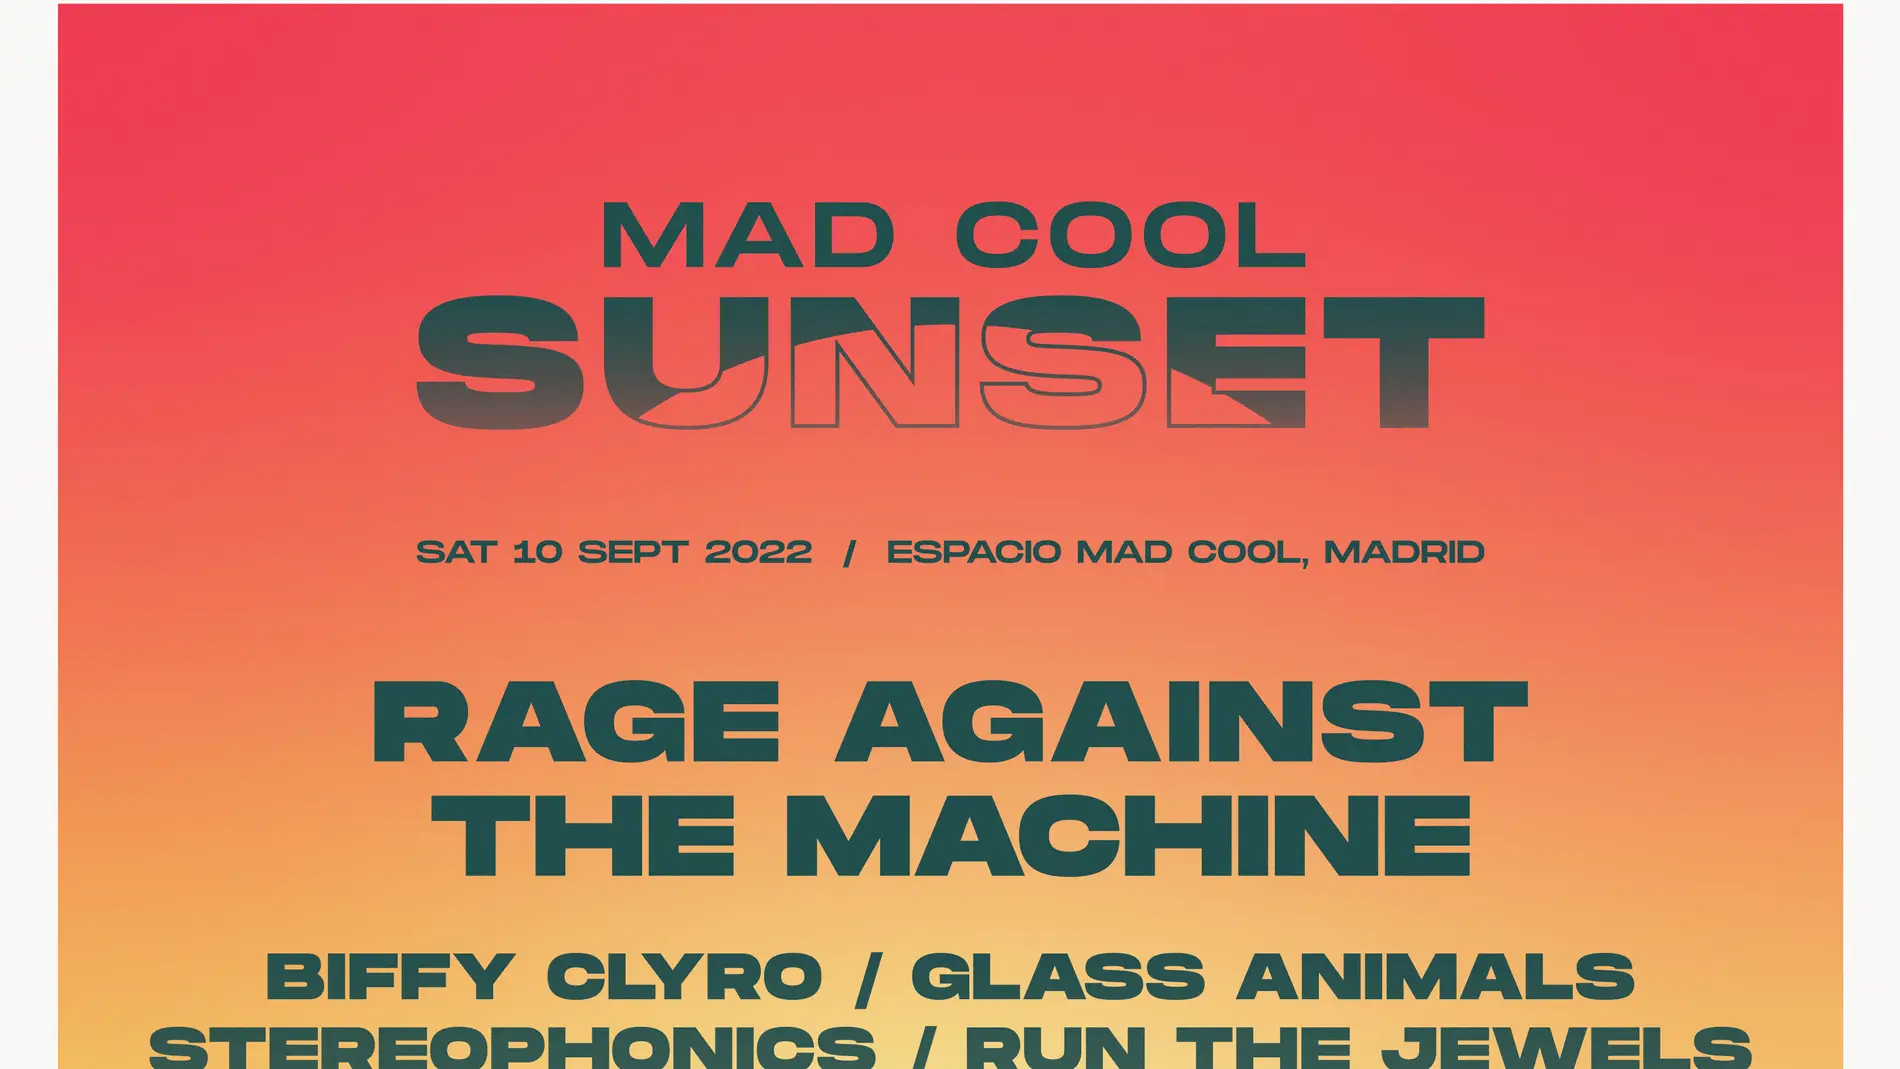 Cartel del Mad Cool Festival